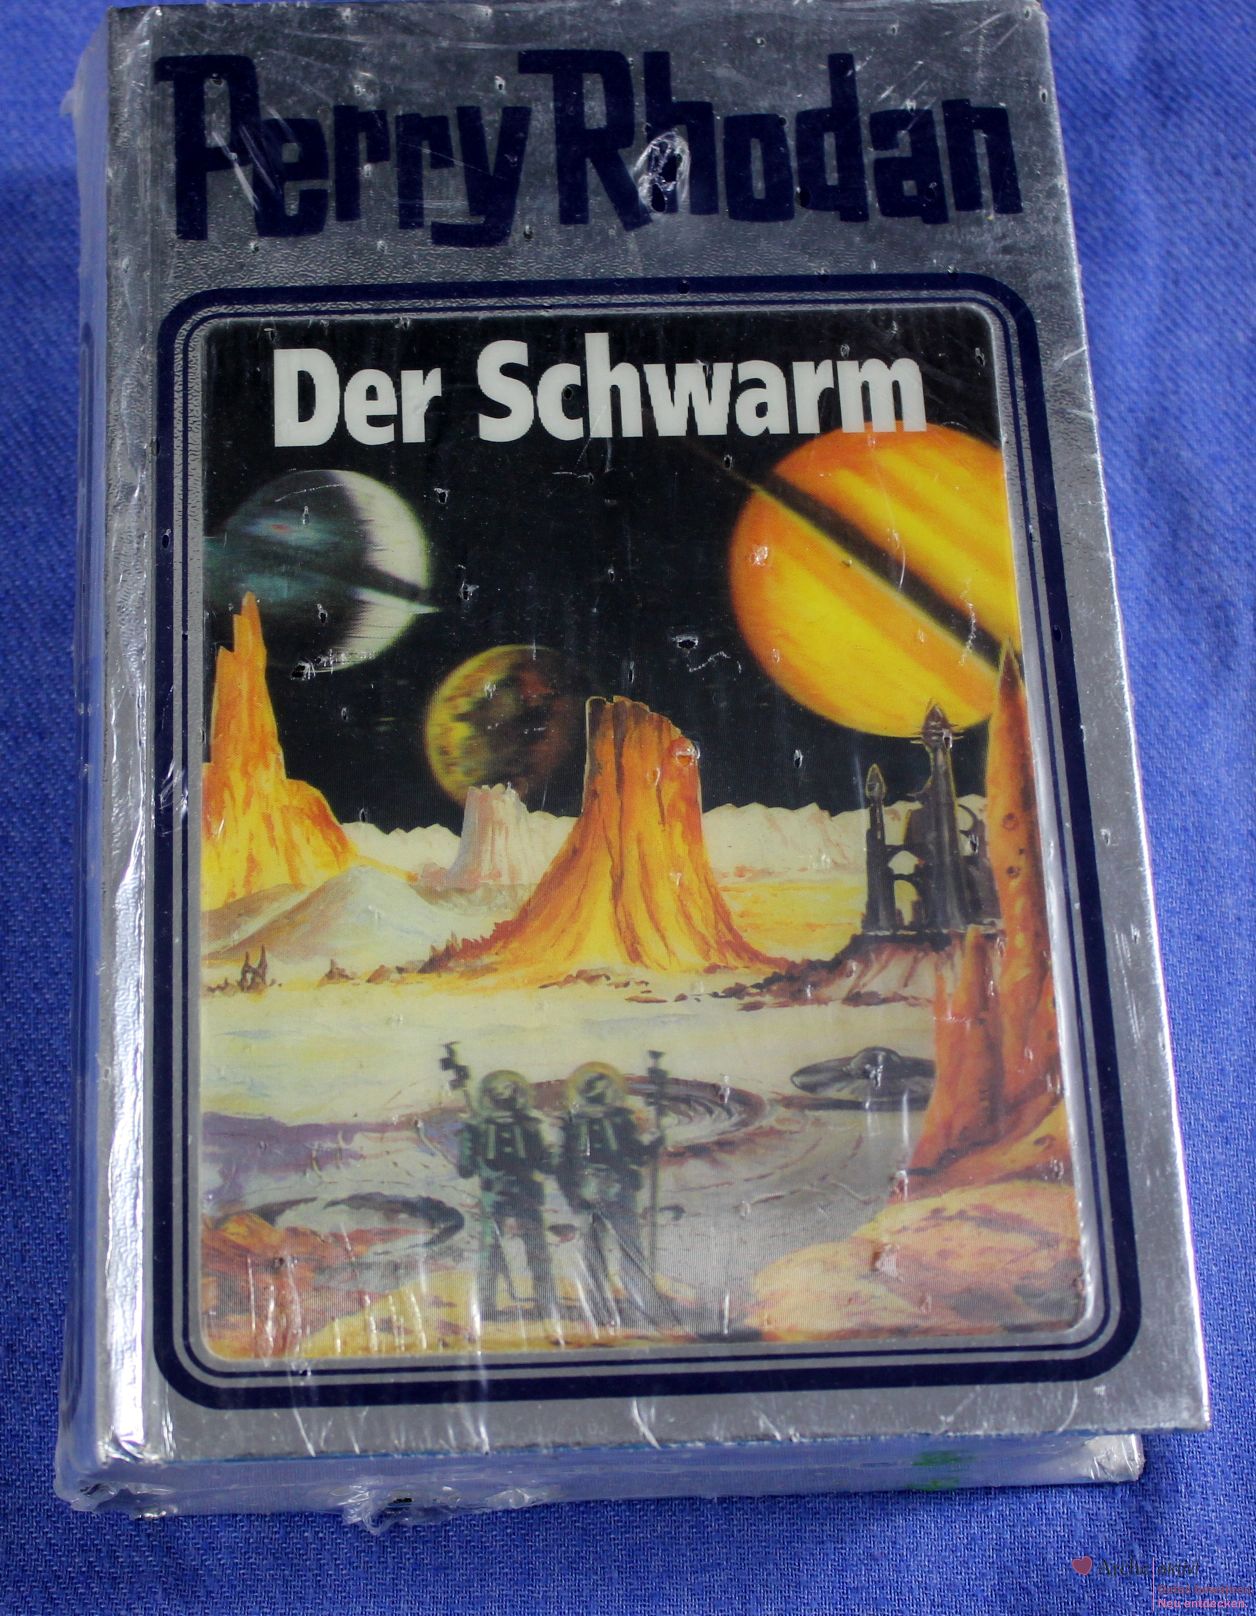 Perry Rhodan Roman "Der Schwarm", Silberband Nr. 55 m. Hologramm - neu, OVP 